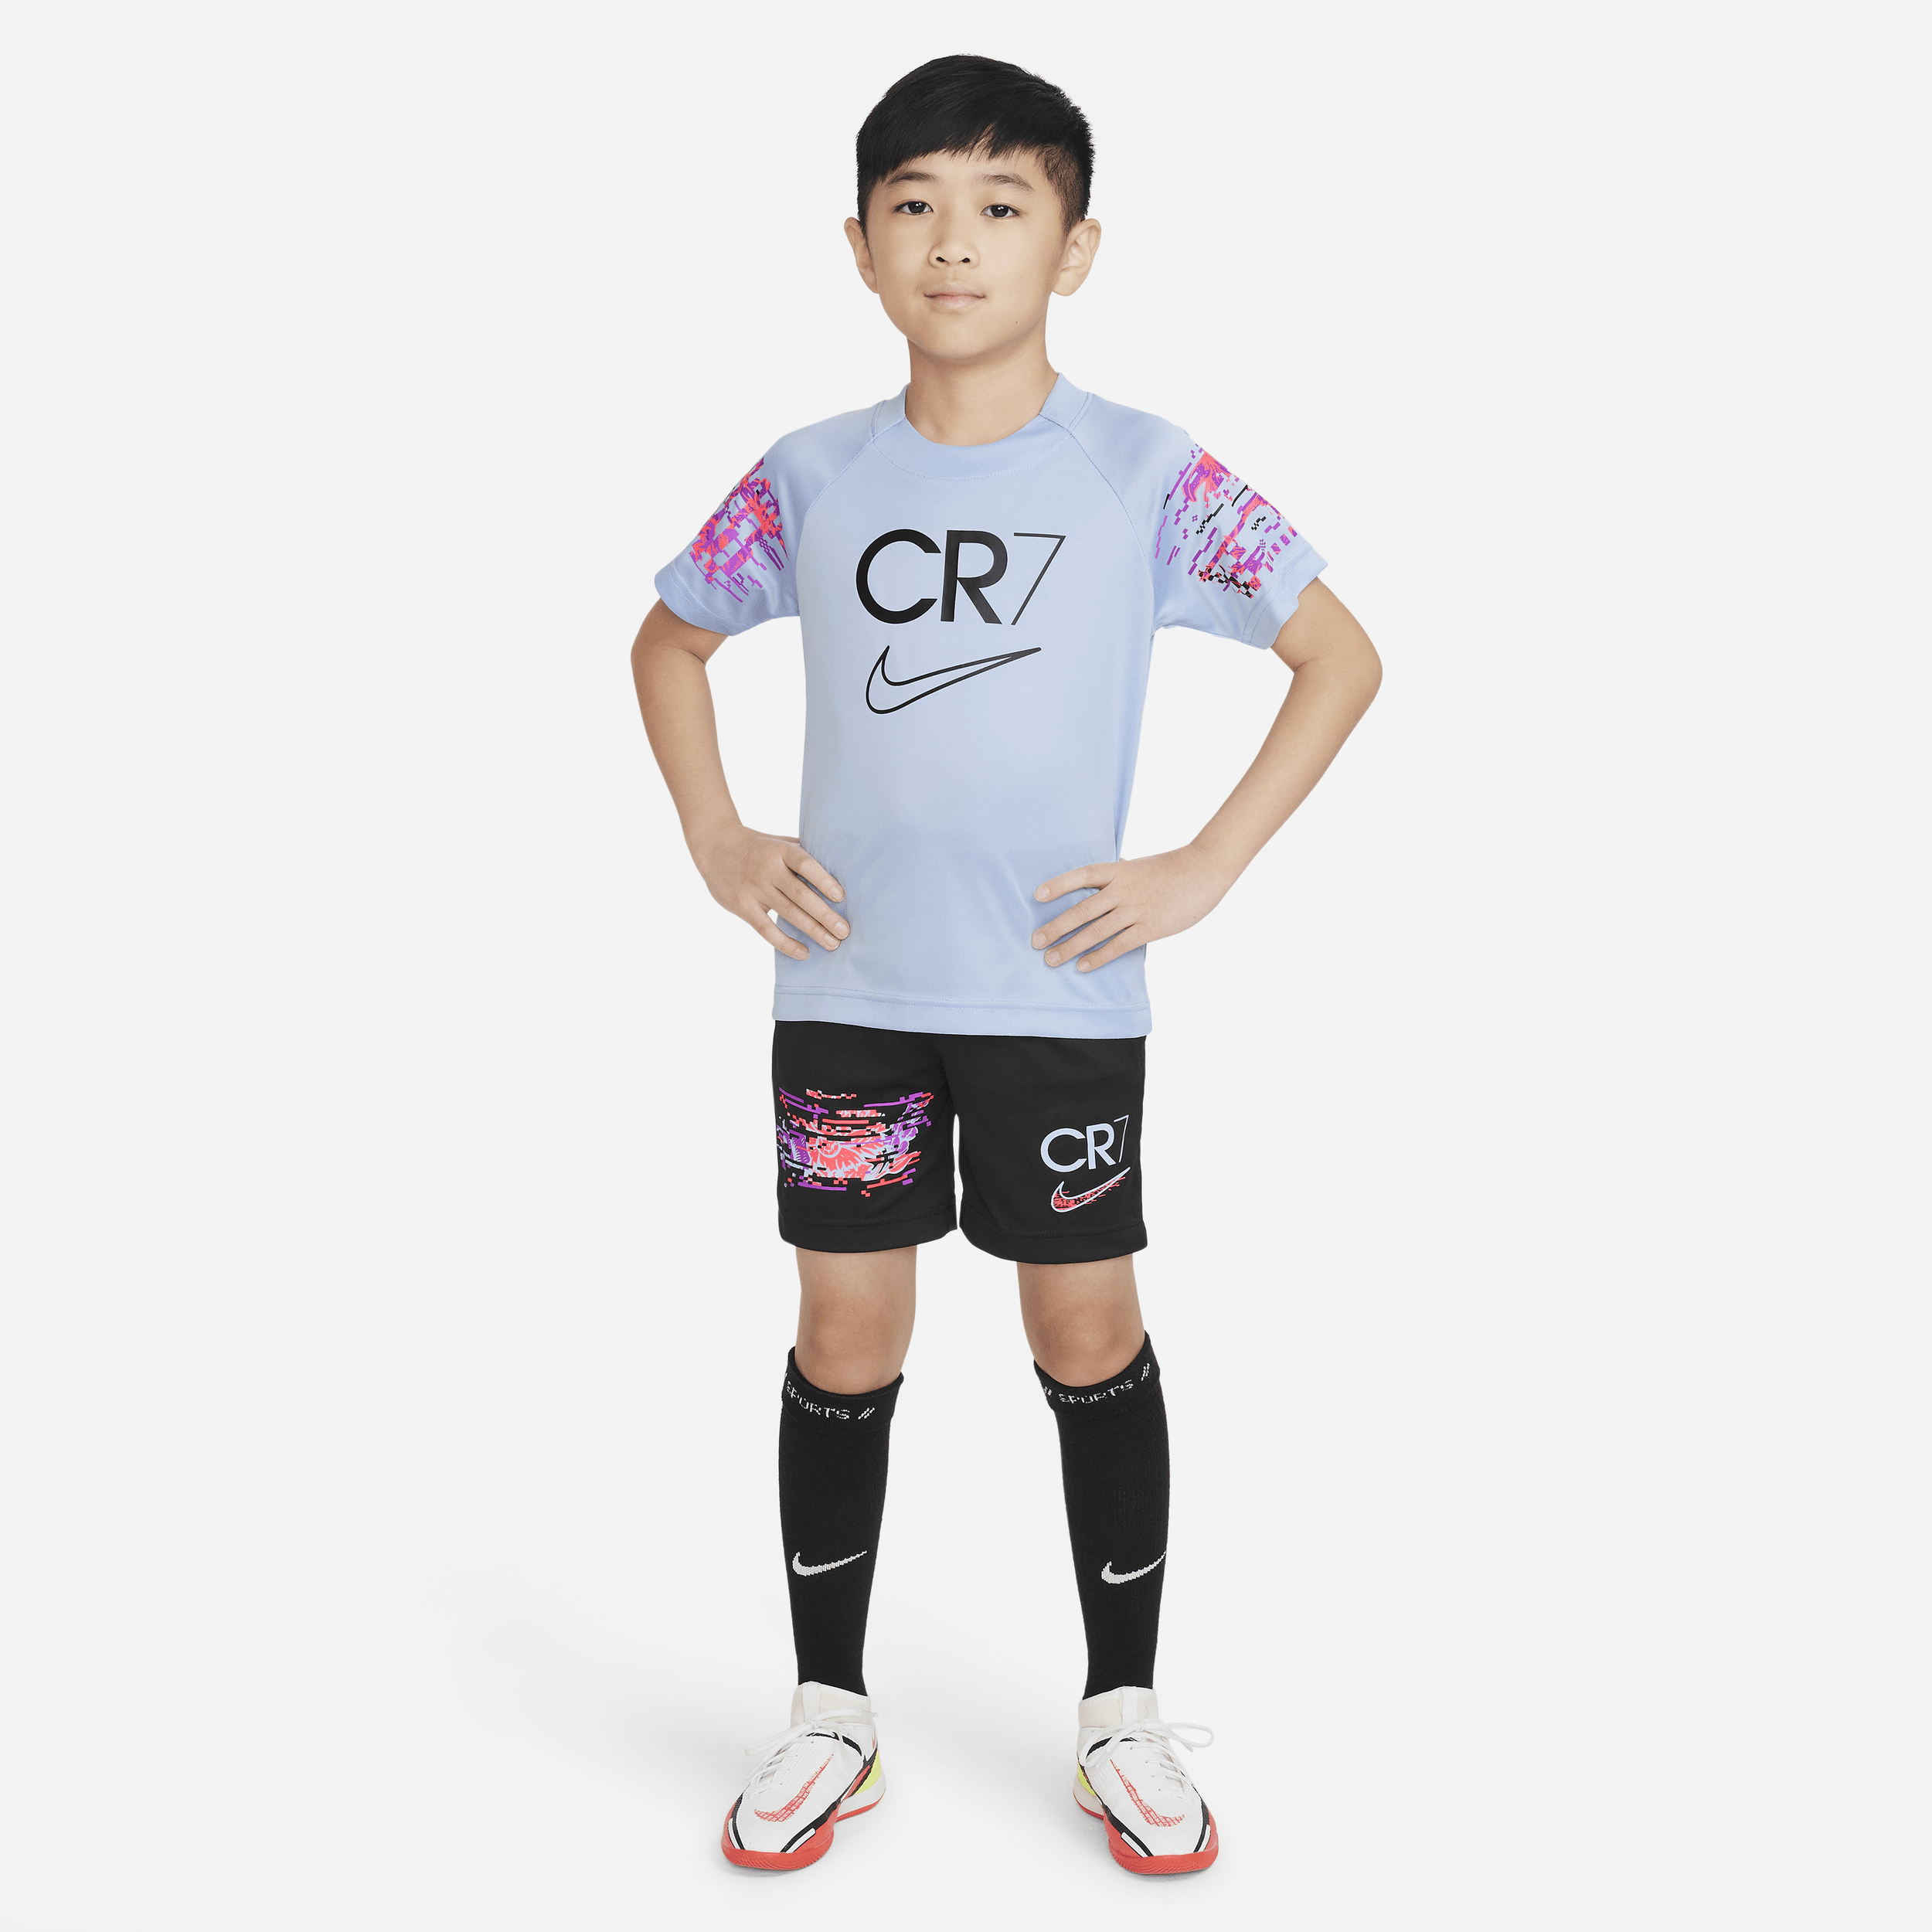 Nike CR7 Dri-FIT Shorts Set Conjunto - Niño/a pequeño/a - Azul